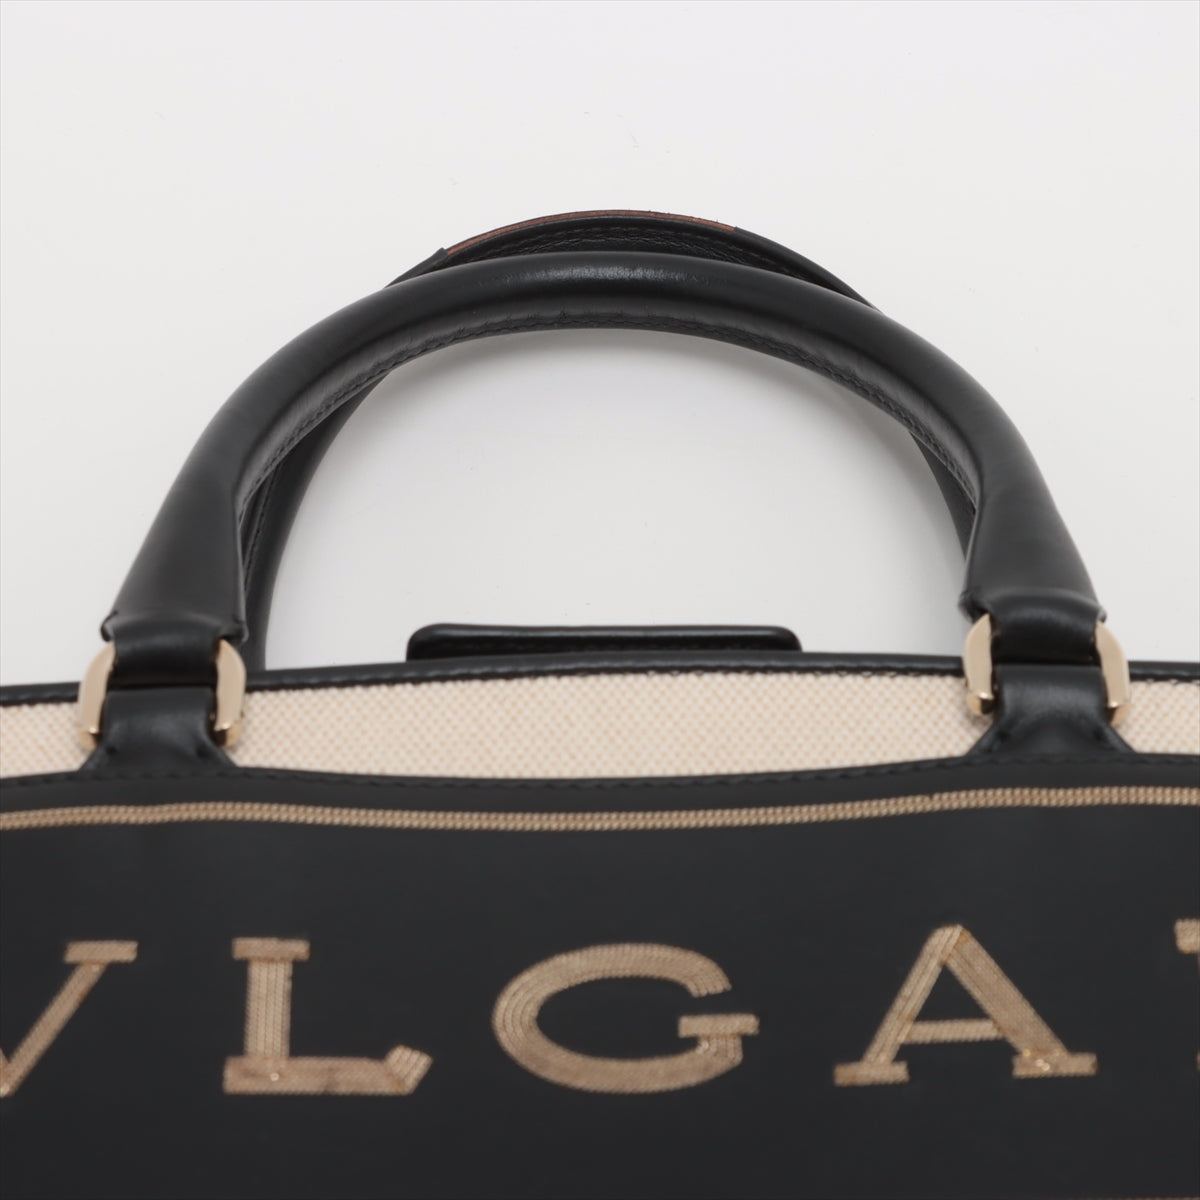 Bulgari logo small canvas x leather 2WAY handbag black x beige smell strong perfume